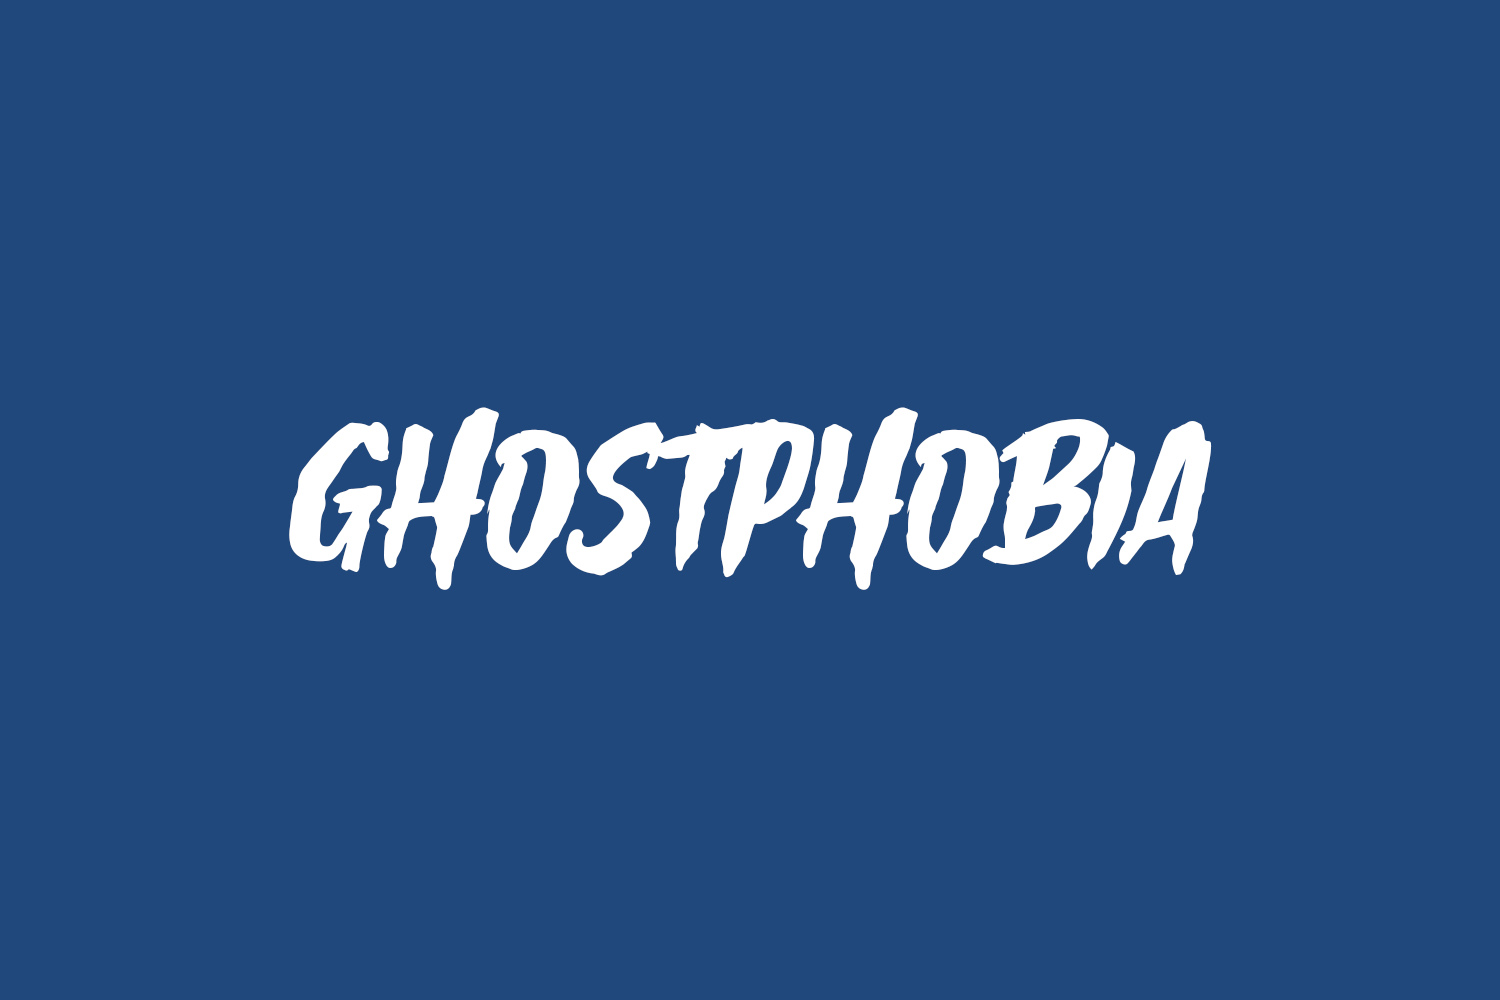 Ghostphobia Free Font